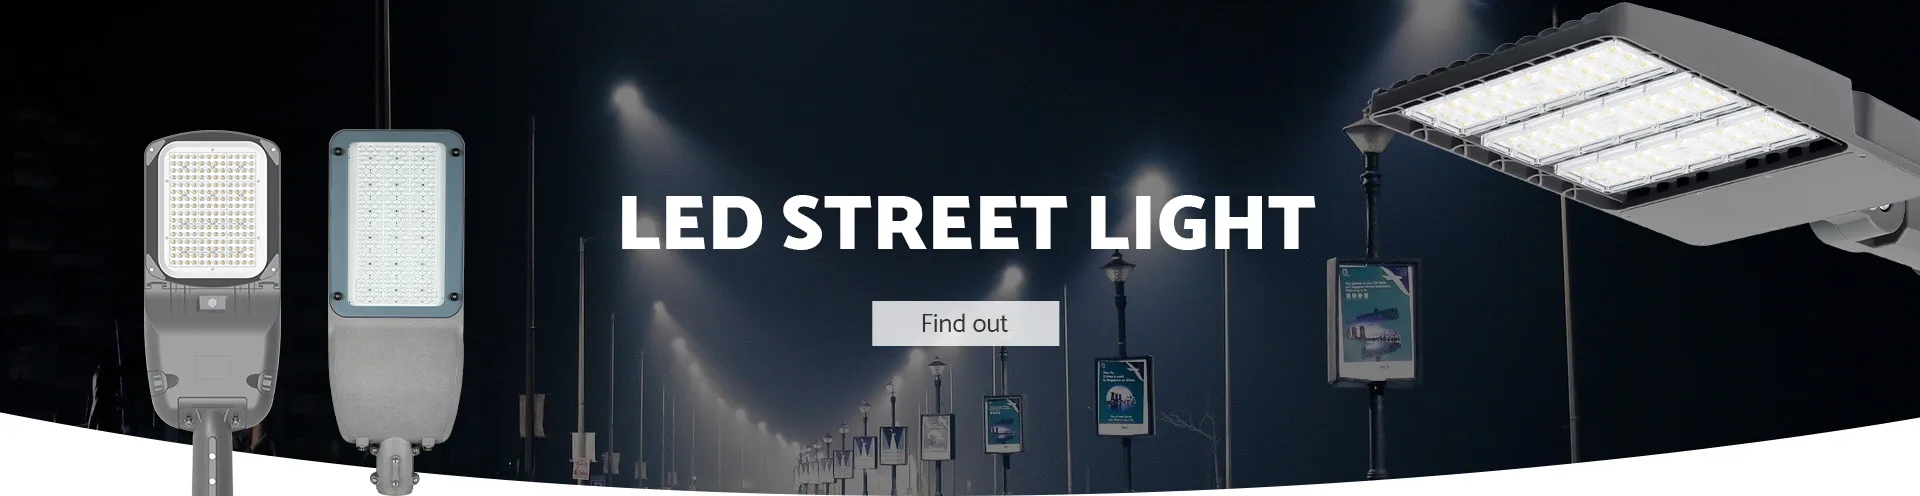 LED Outdoor Street Light